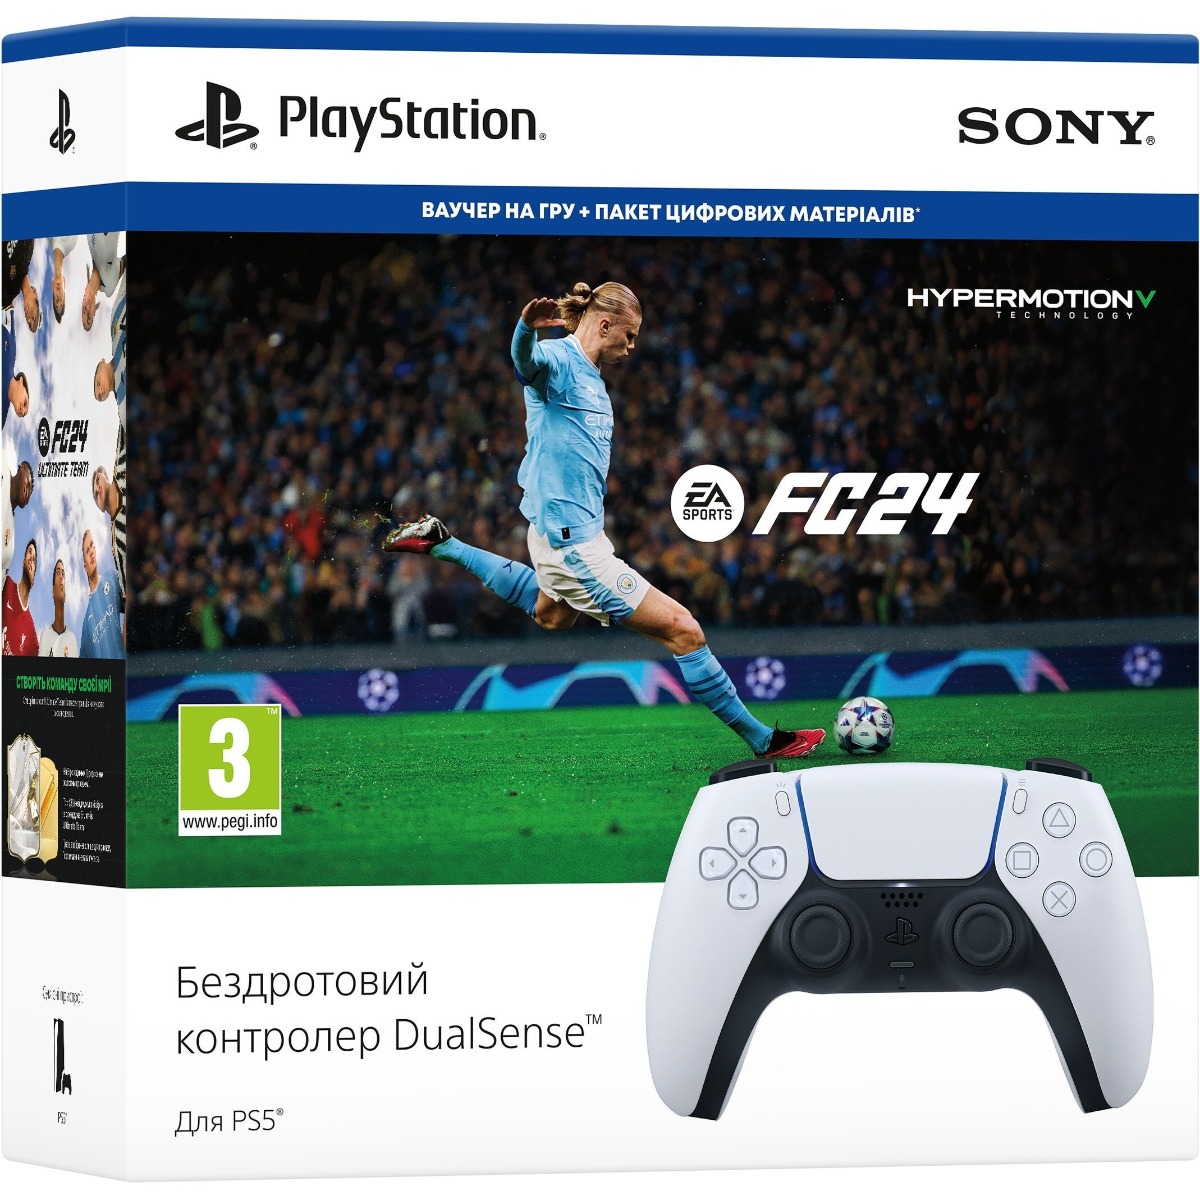 Ps/gm. Беспроводной контроллер Sony DualSense EA SPORTS FC 24 Bundle